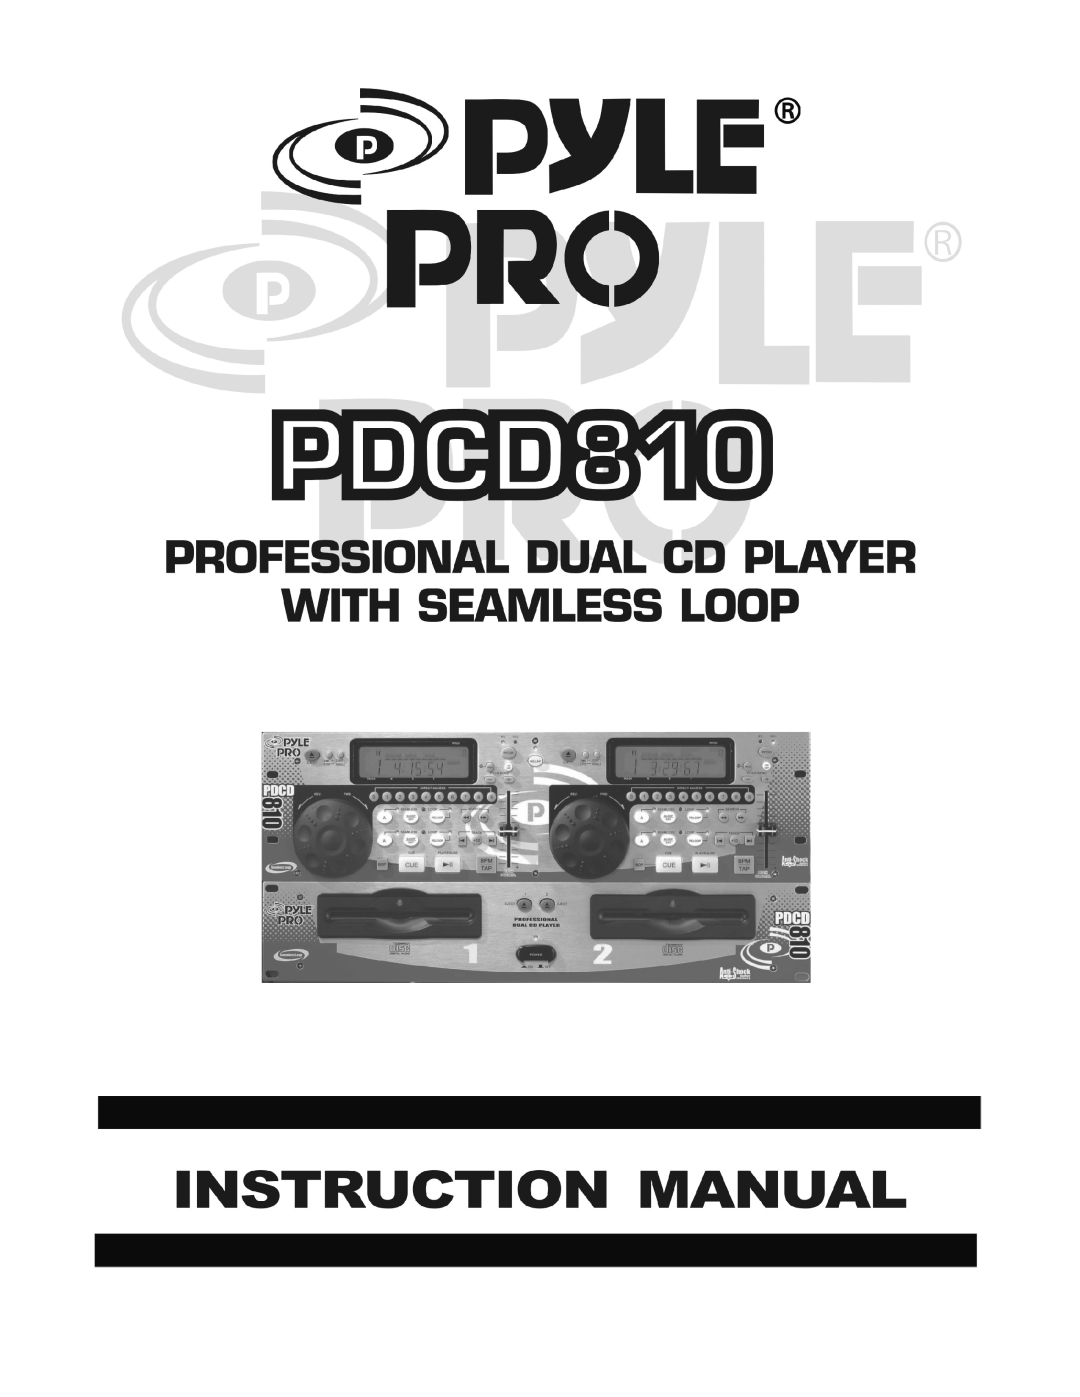 Radio Shack PDCD810 manual 